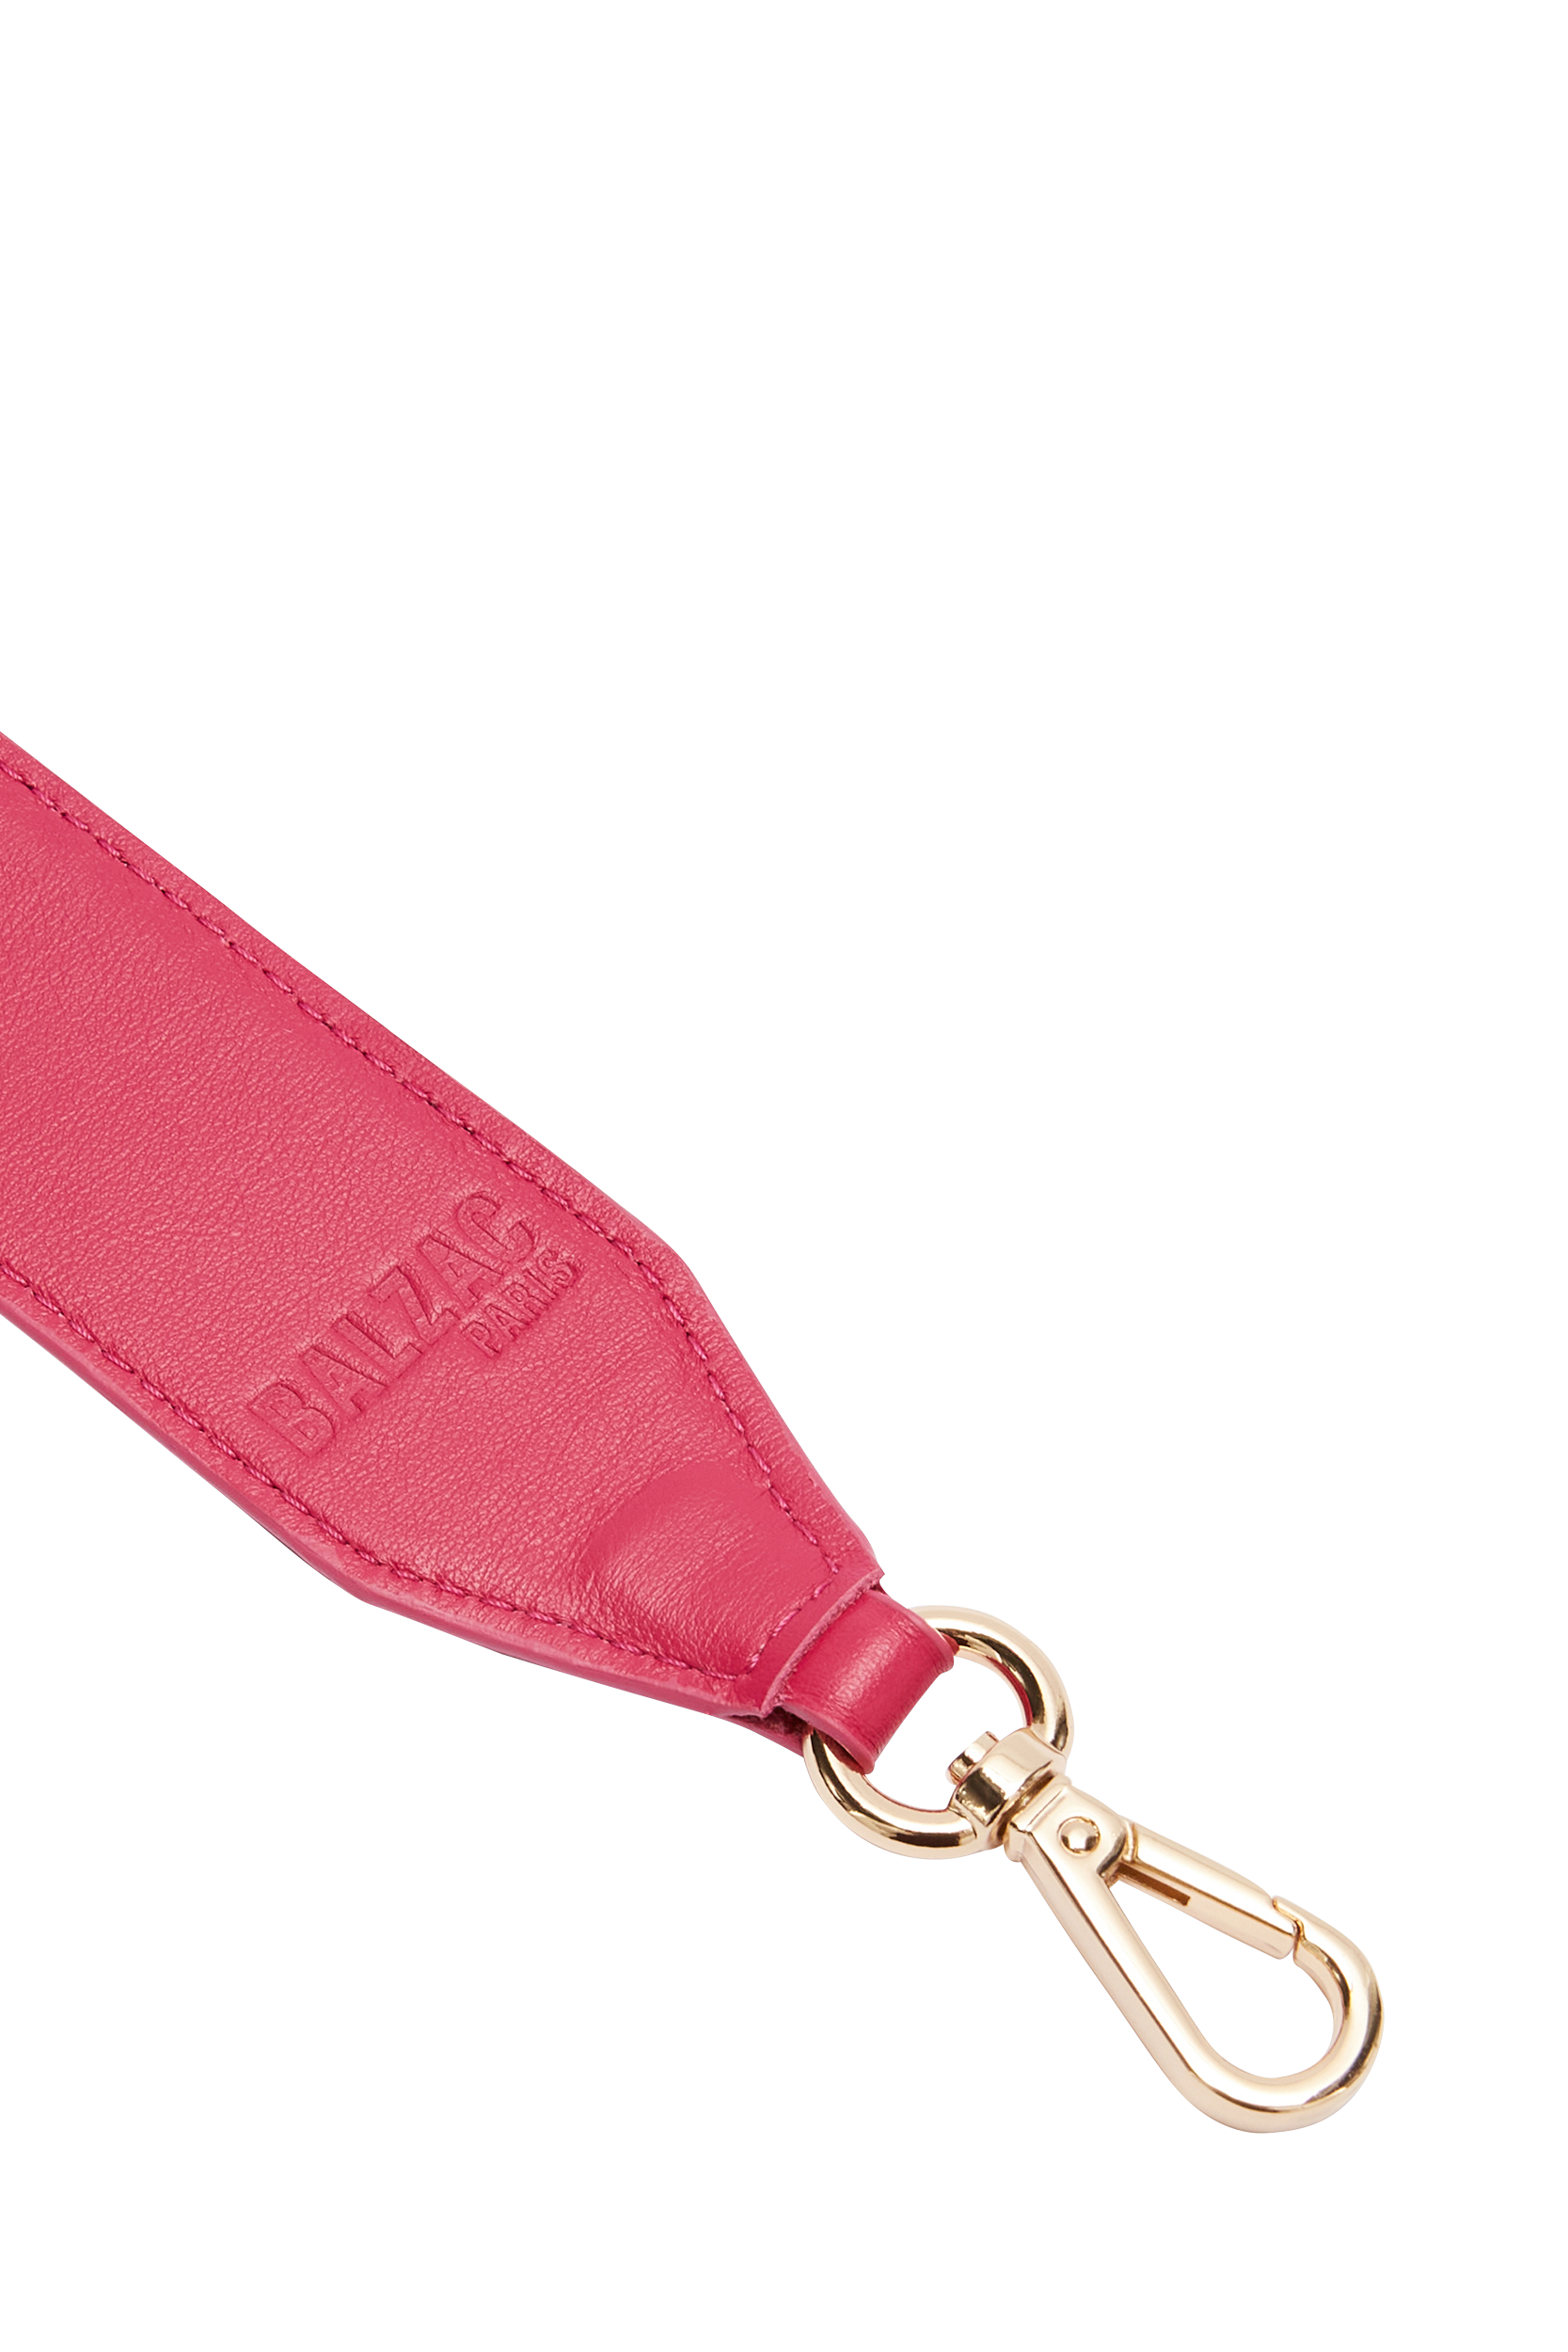 Pink handle